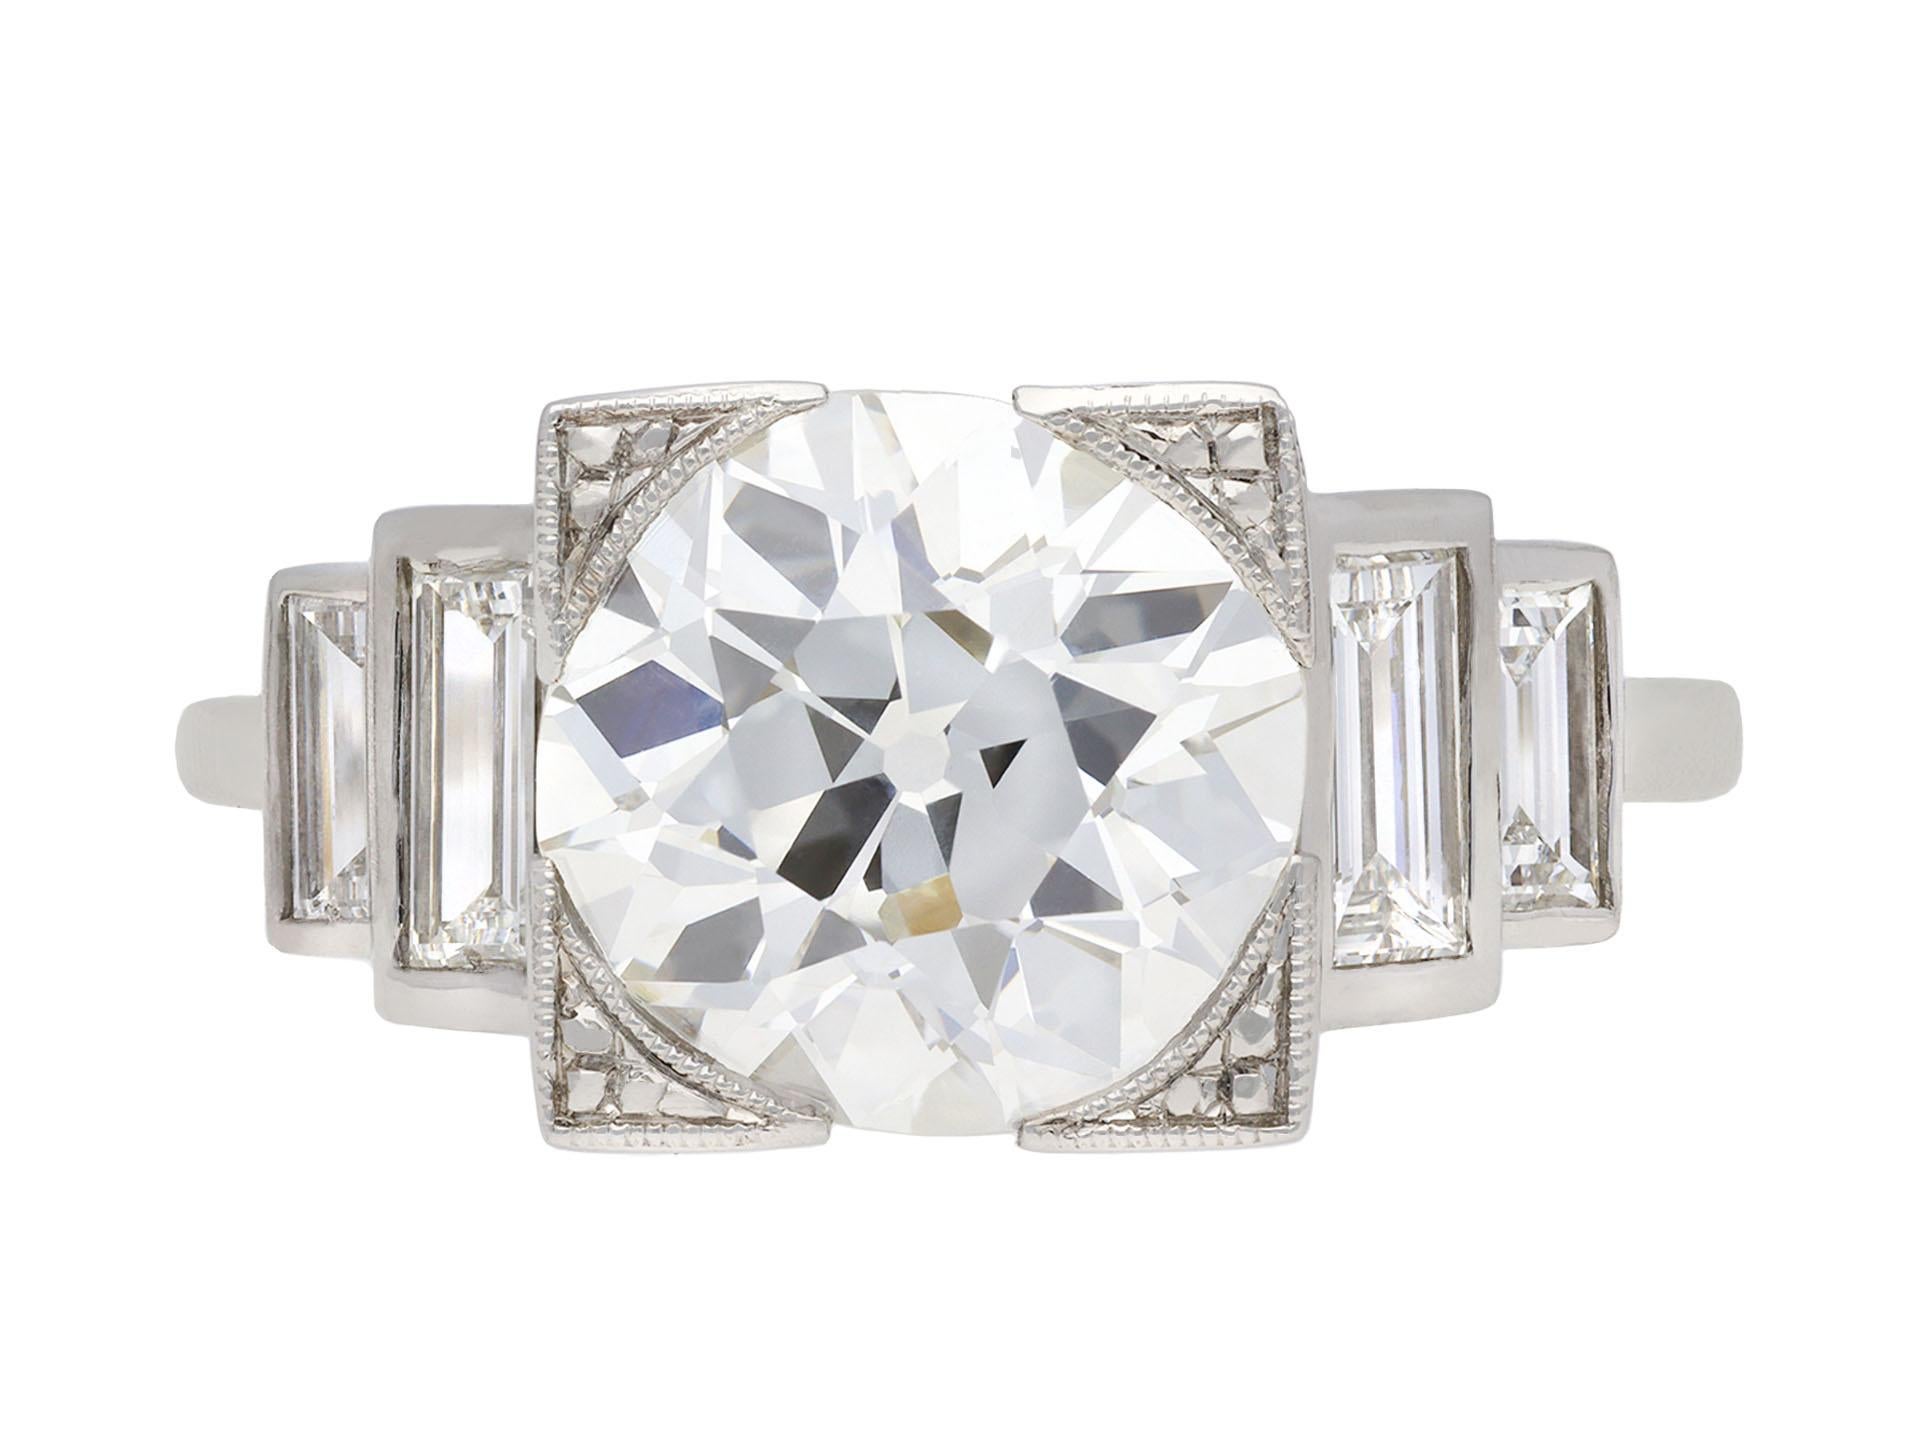 Art Deco Verlobungsring mit 3,50 Karat Diamanten, um 1930.